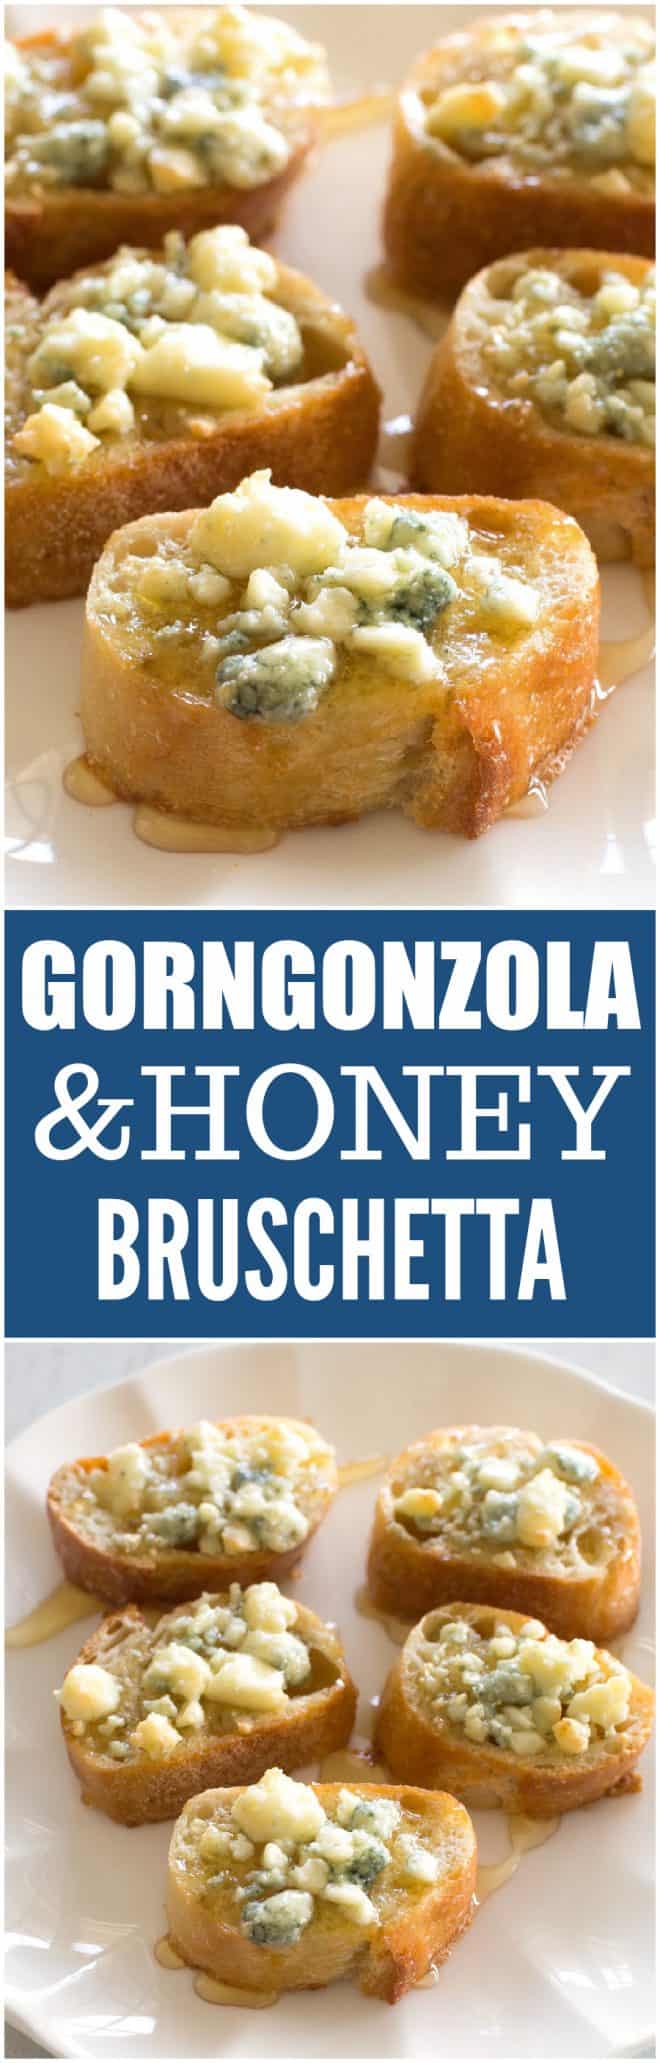 gorgonzola and honey on bread